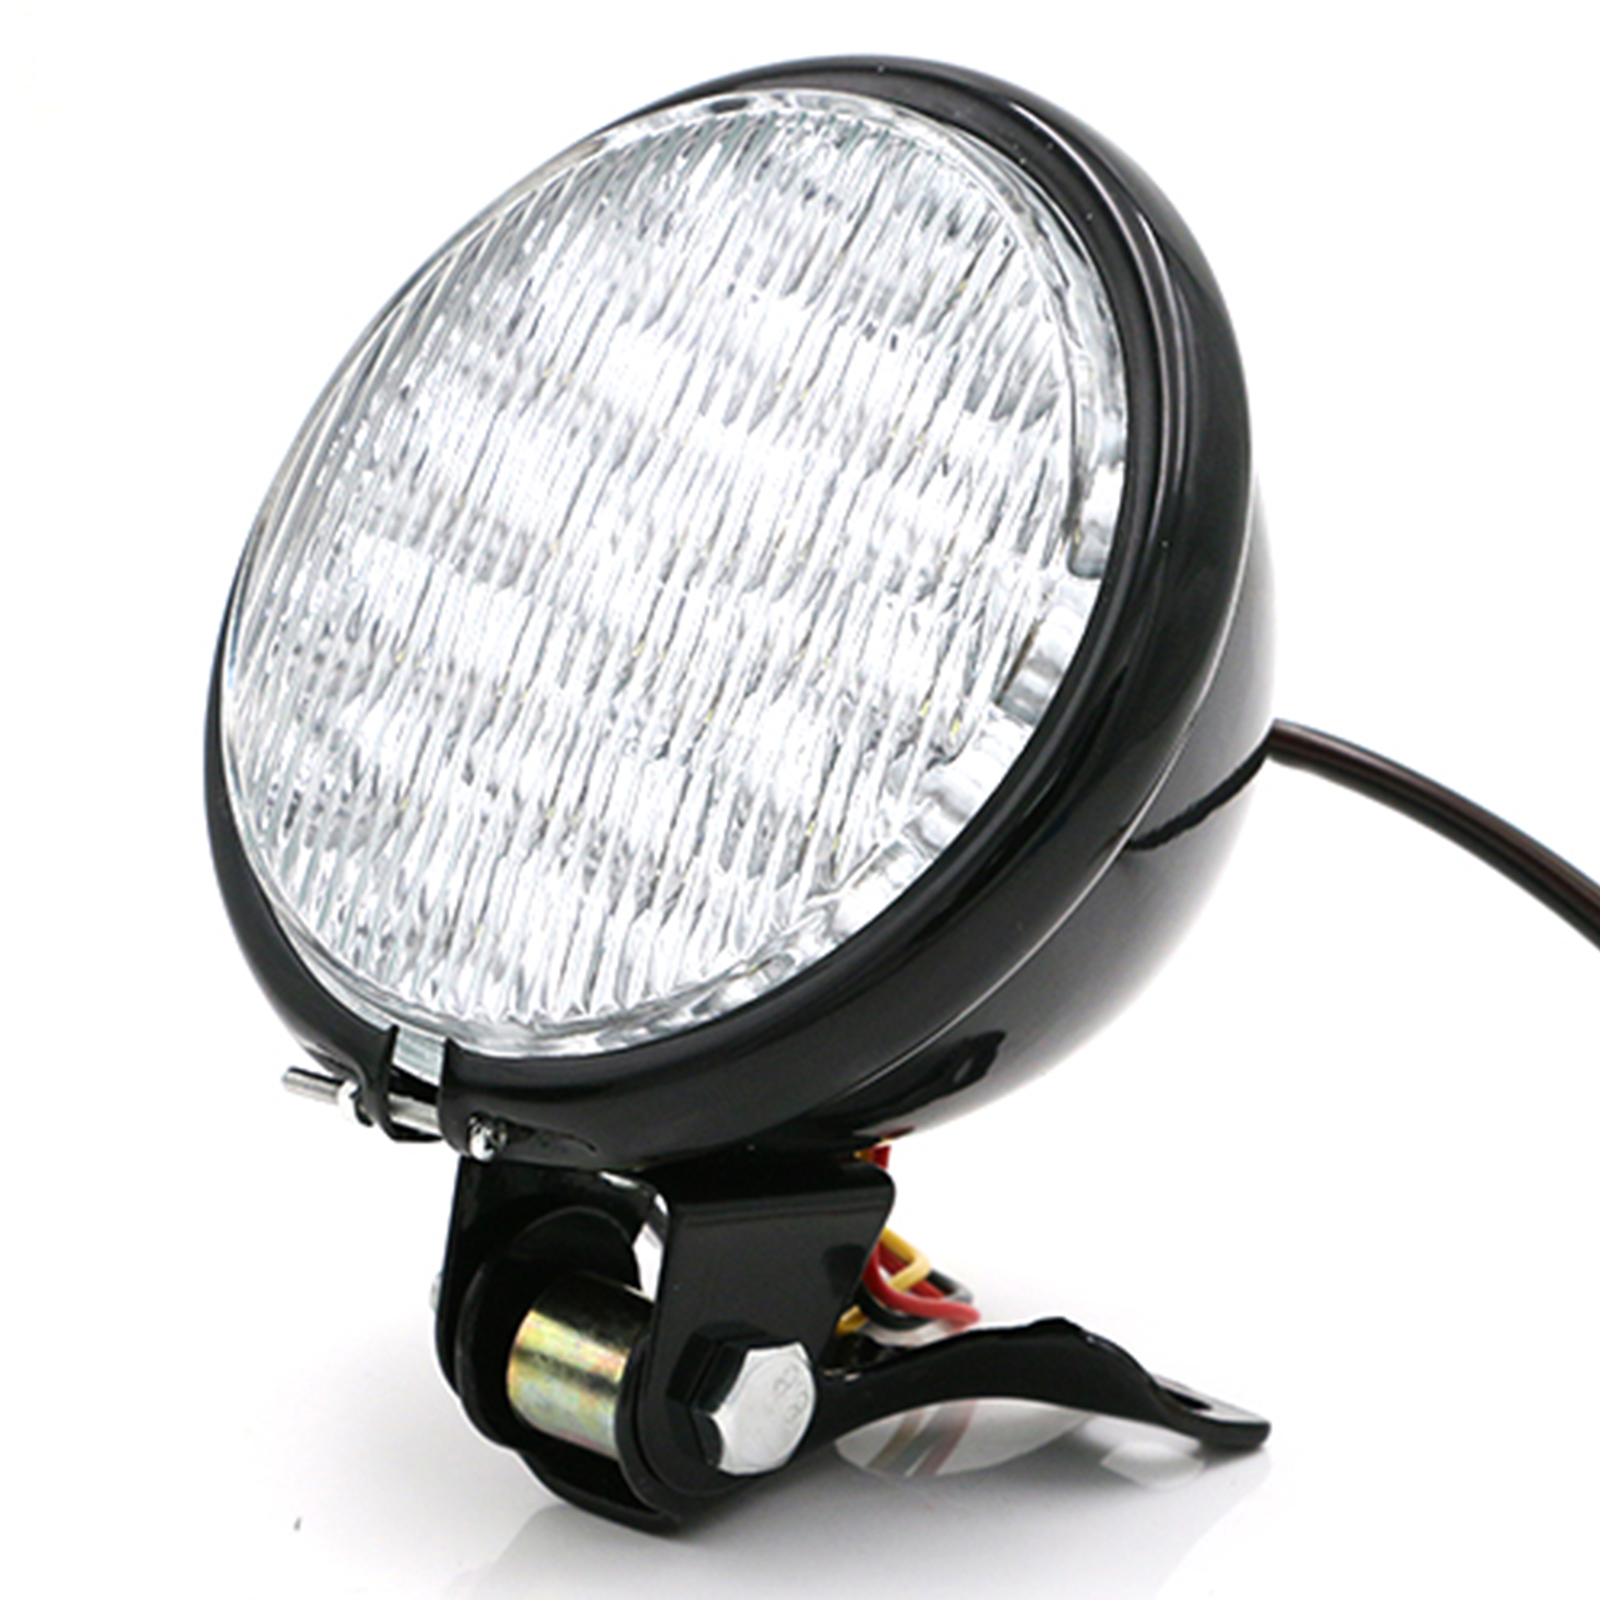 5'' Vintage LED Headlight - Black & Transparent